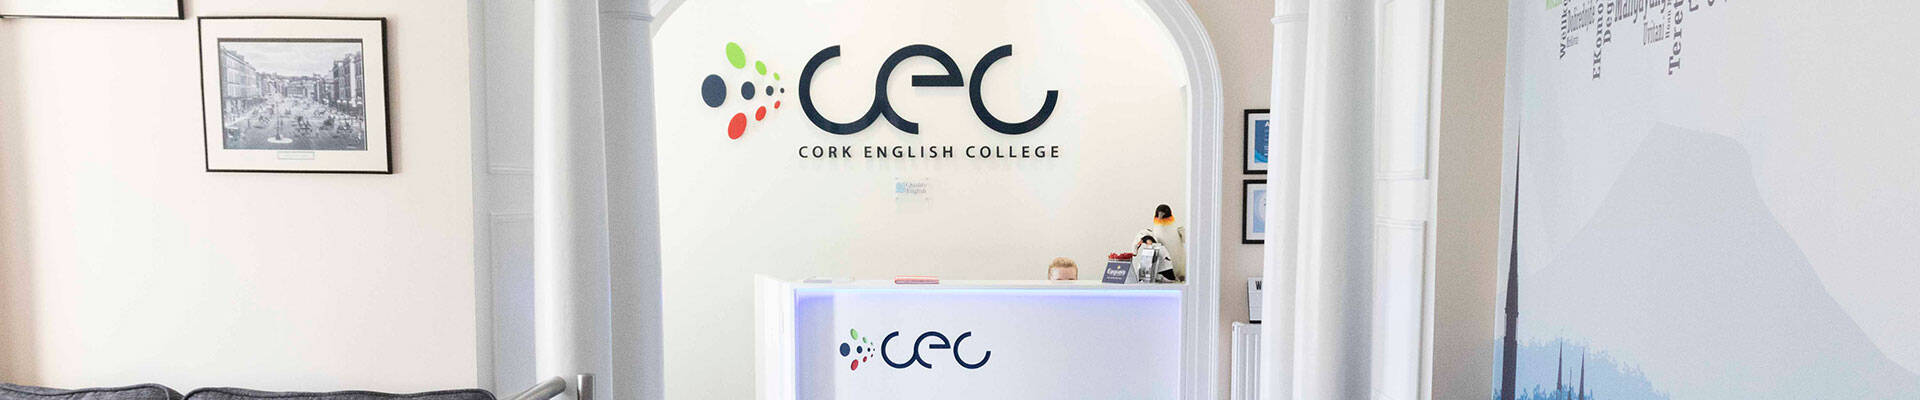 Cork English College - CEC görseli